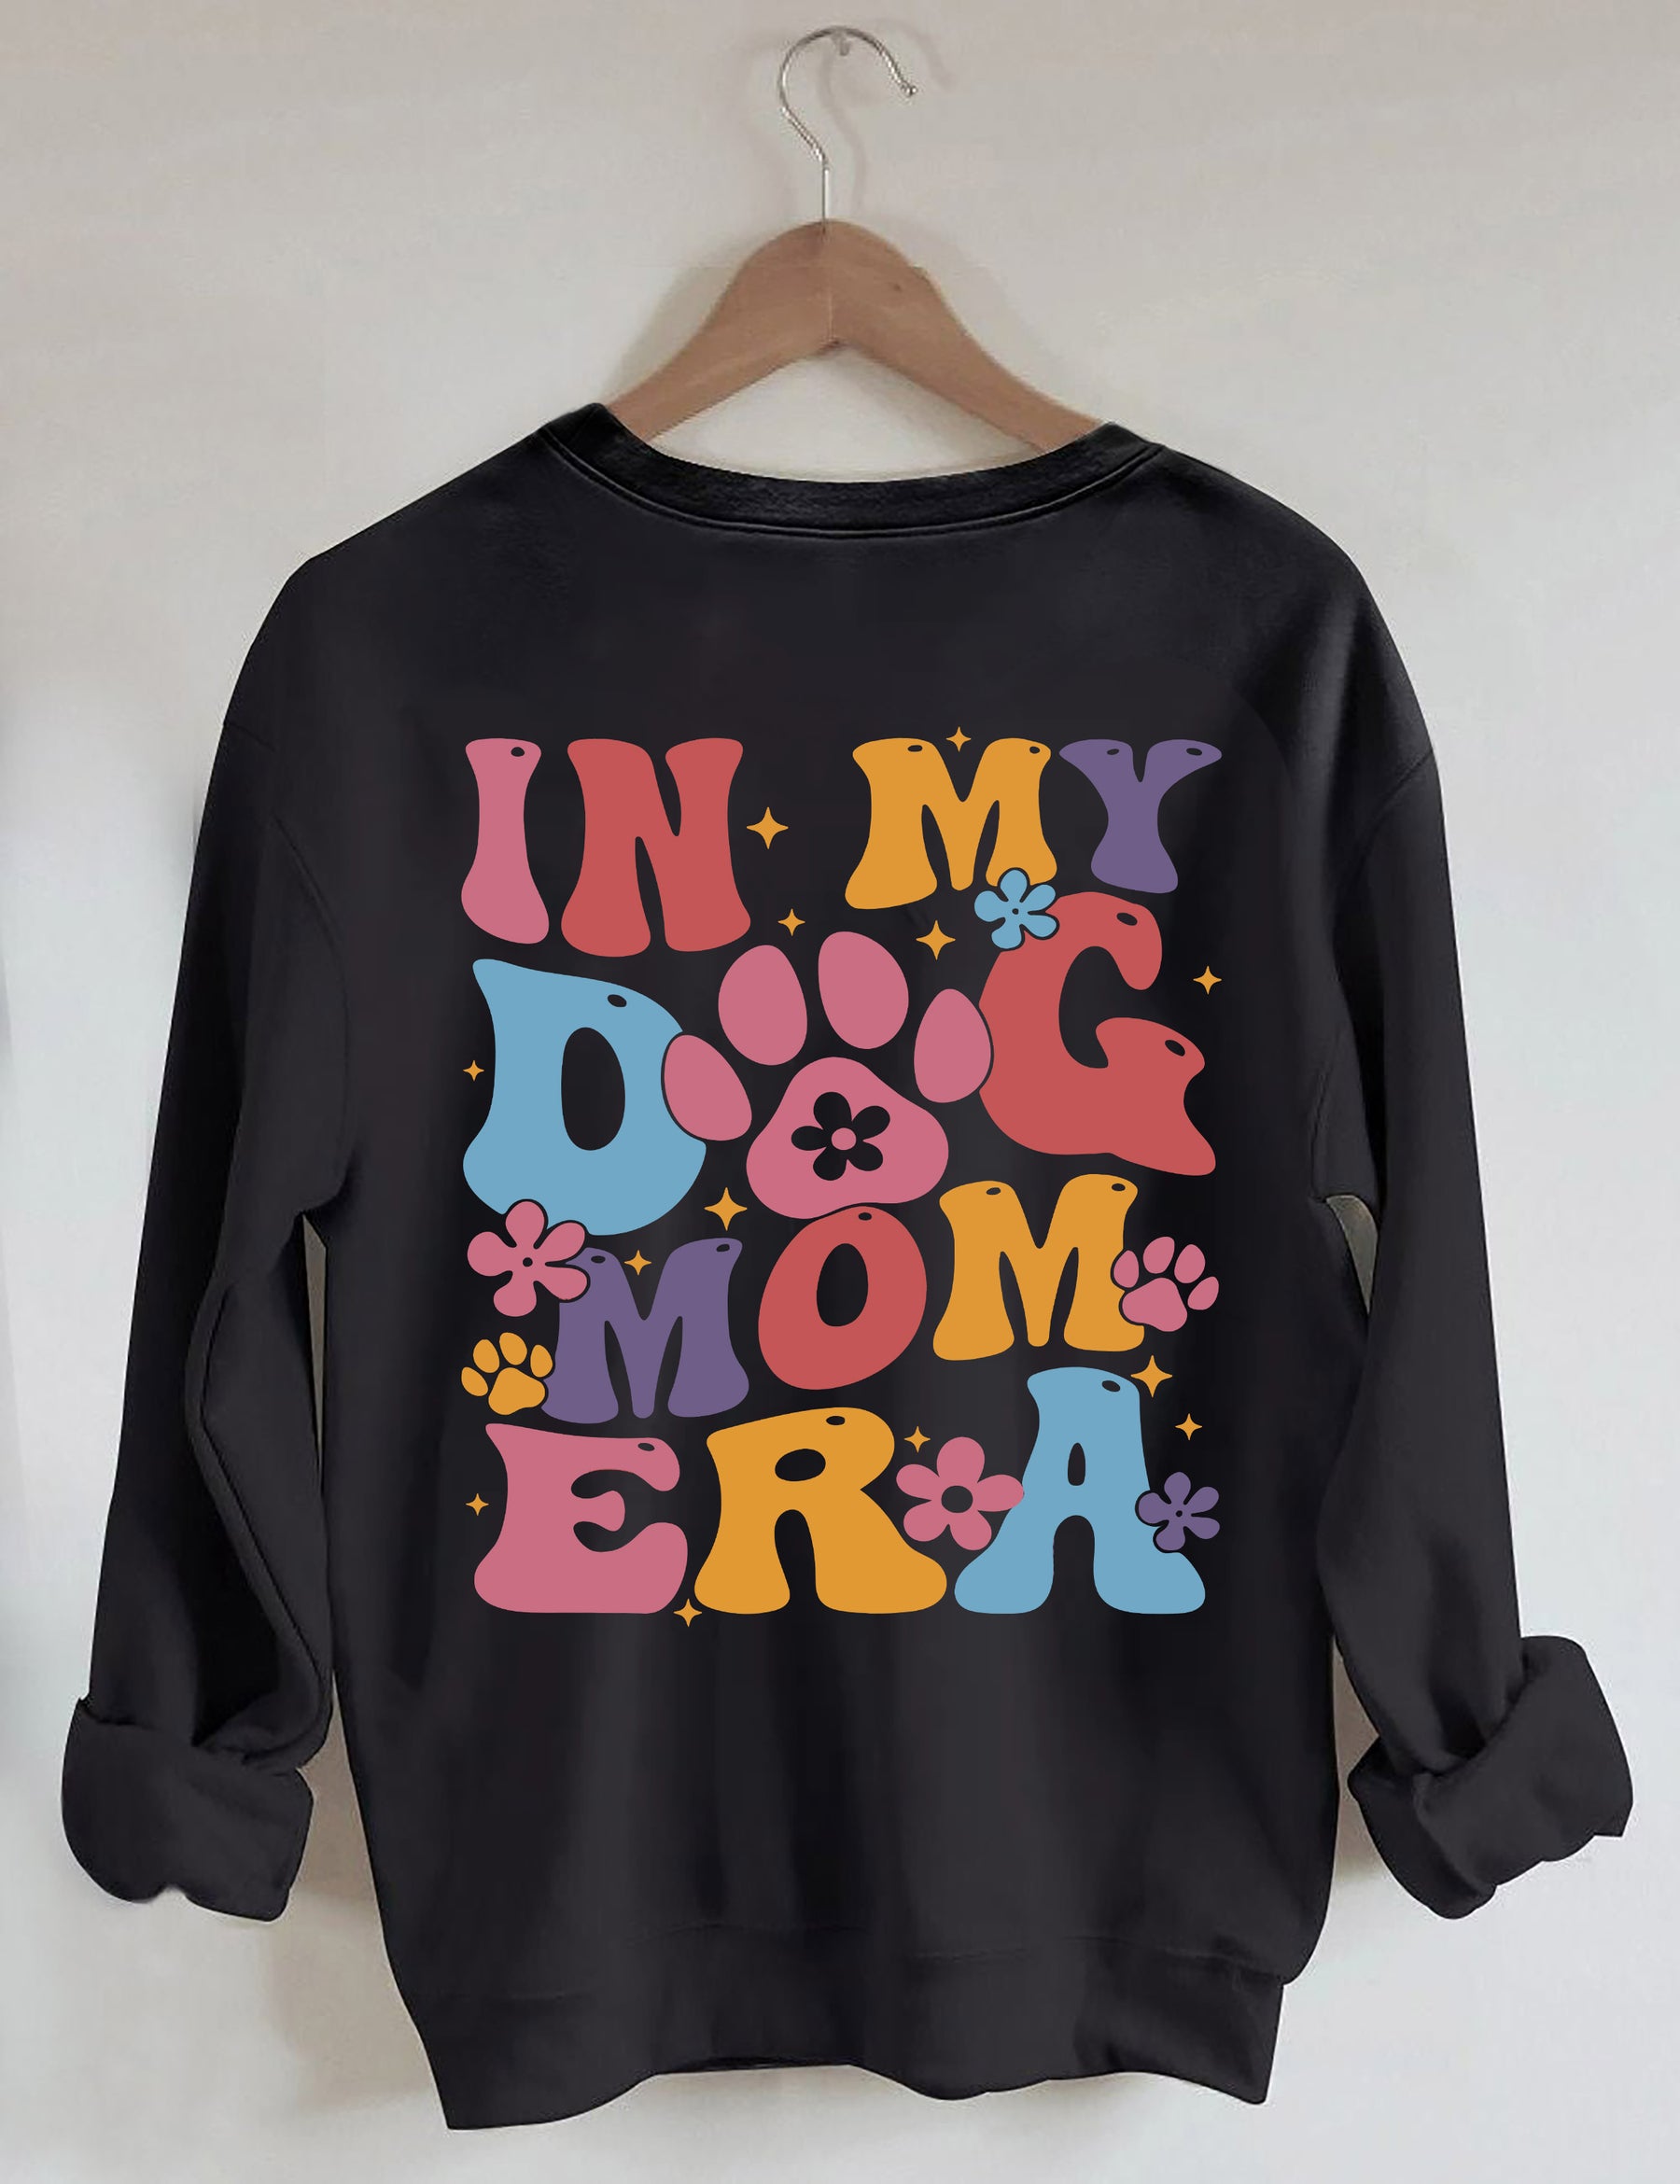 In My Dog Mom Era Sweatshirt